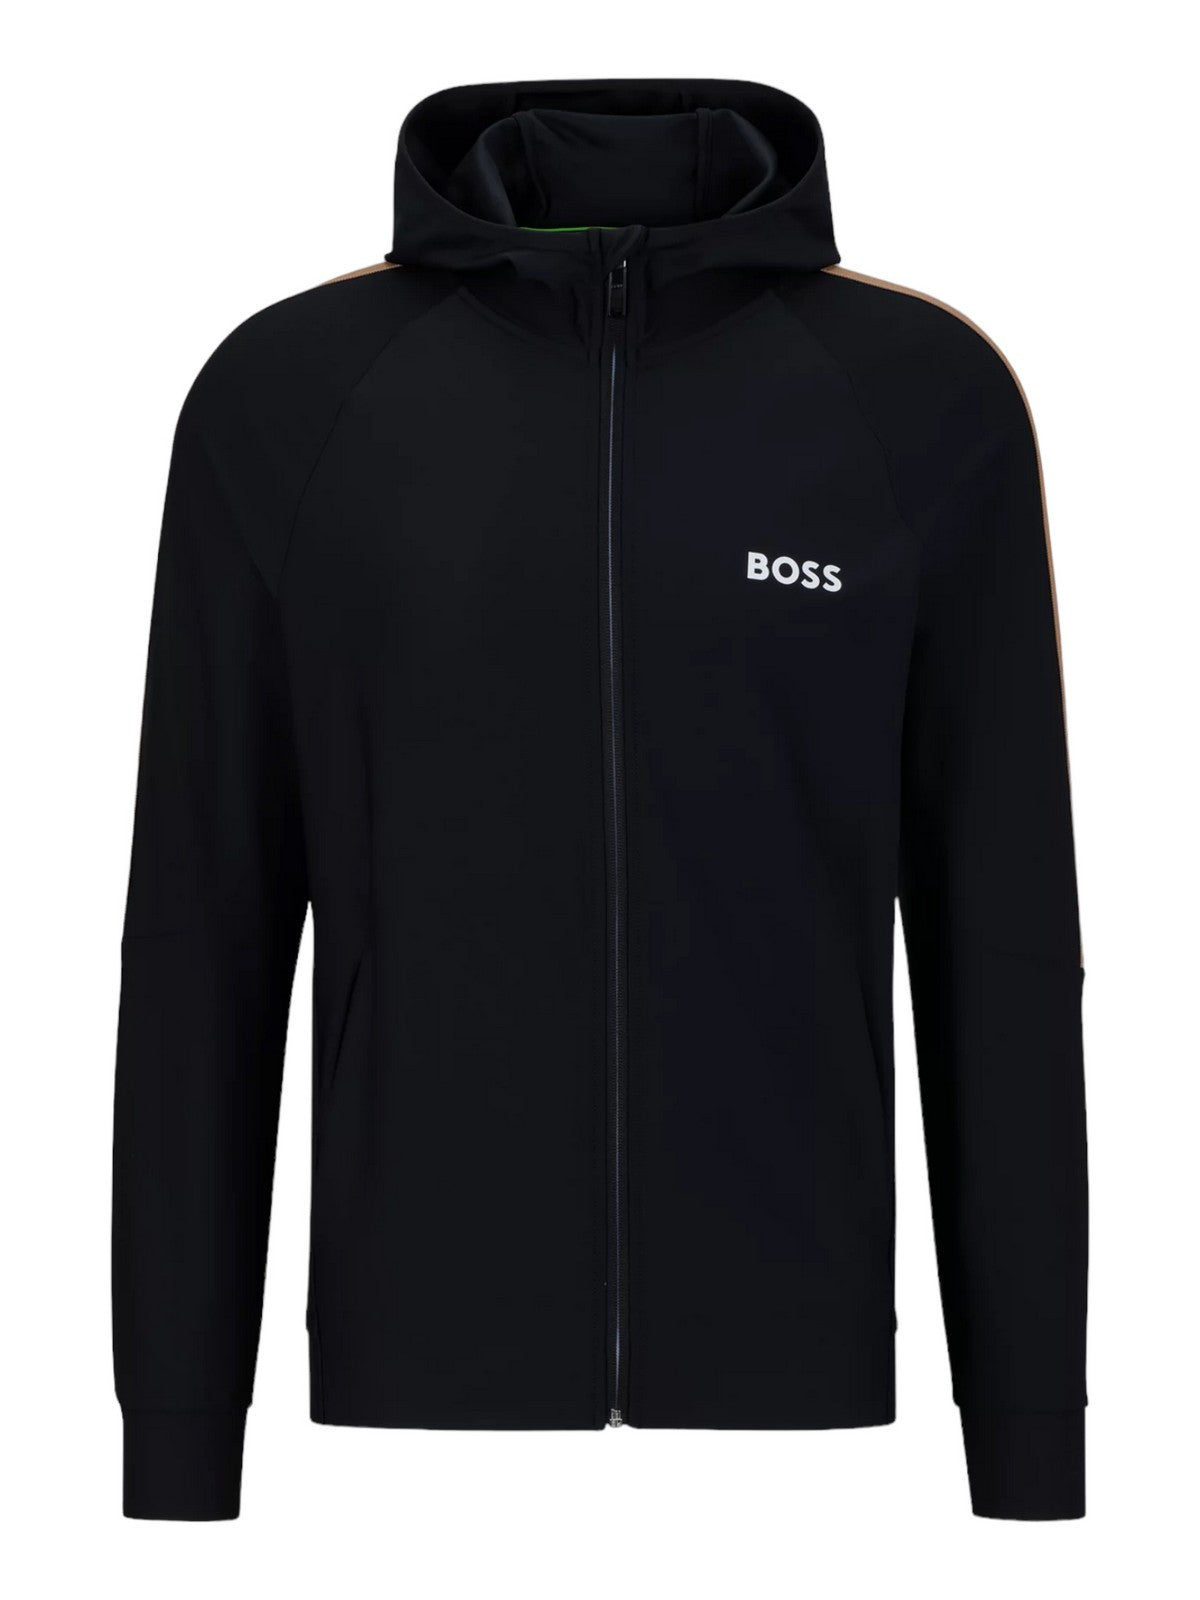 HUGO BOSS Hommes Sweatshirt 50504552 001 Noir